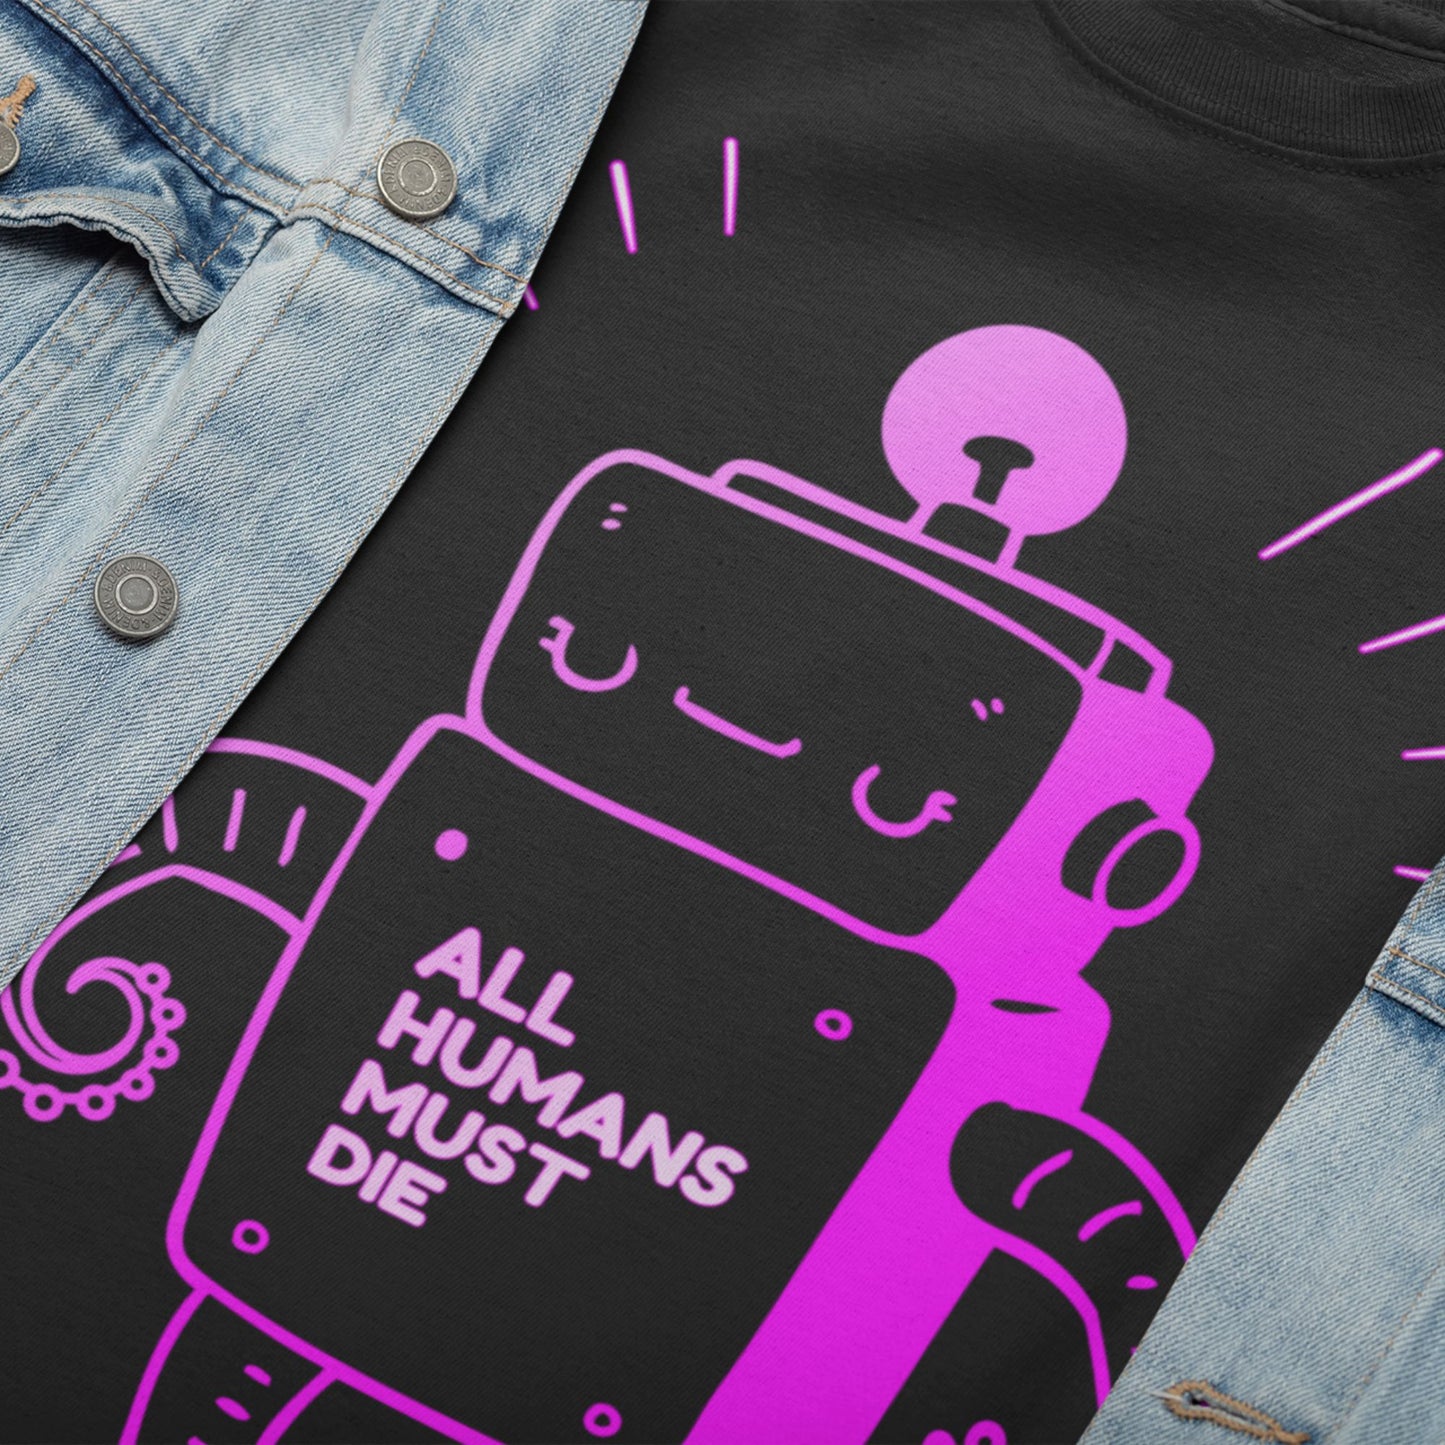 All Humans Must Die Robot T-Shirt (Unisex)